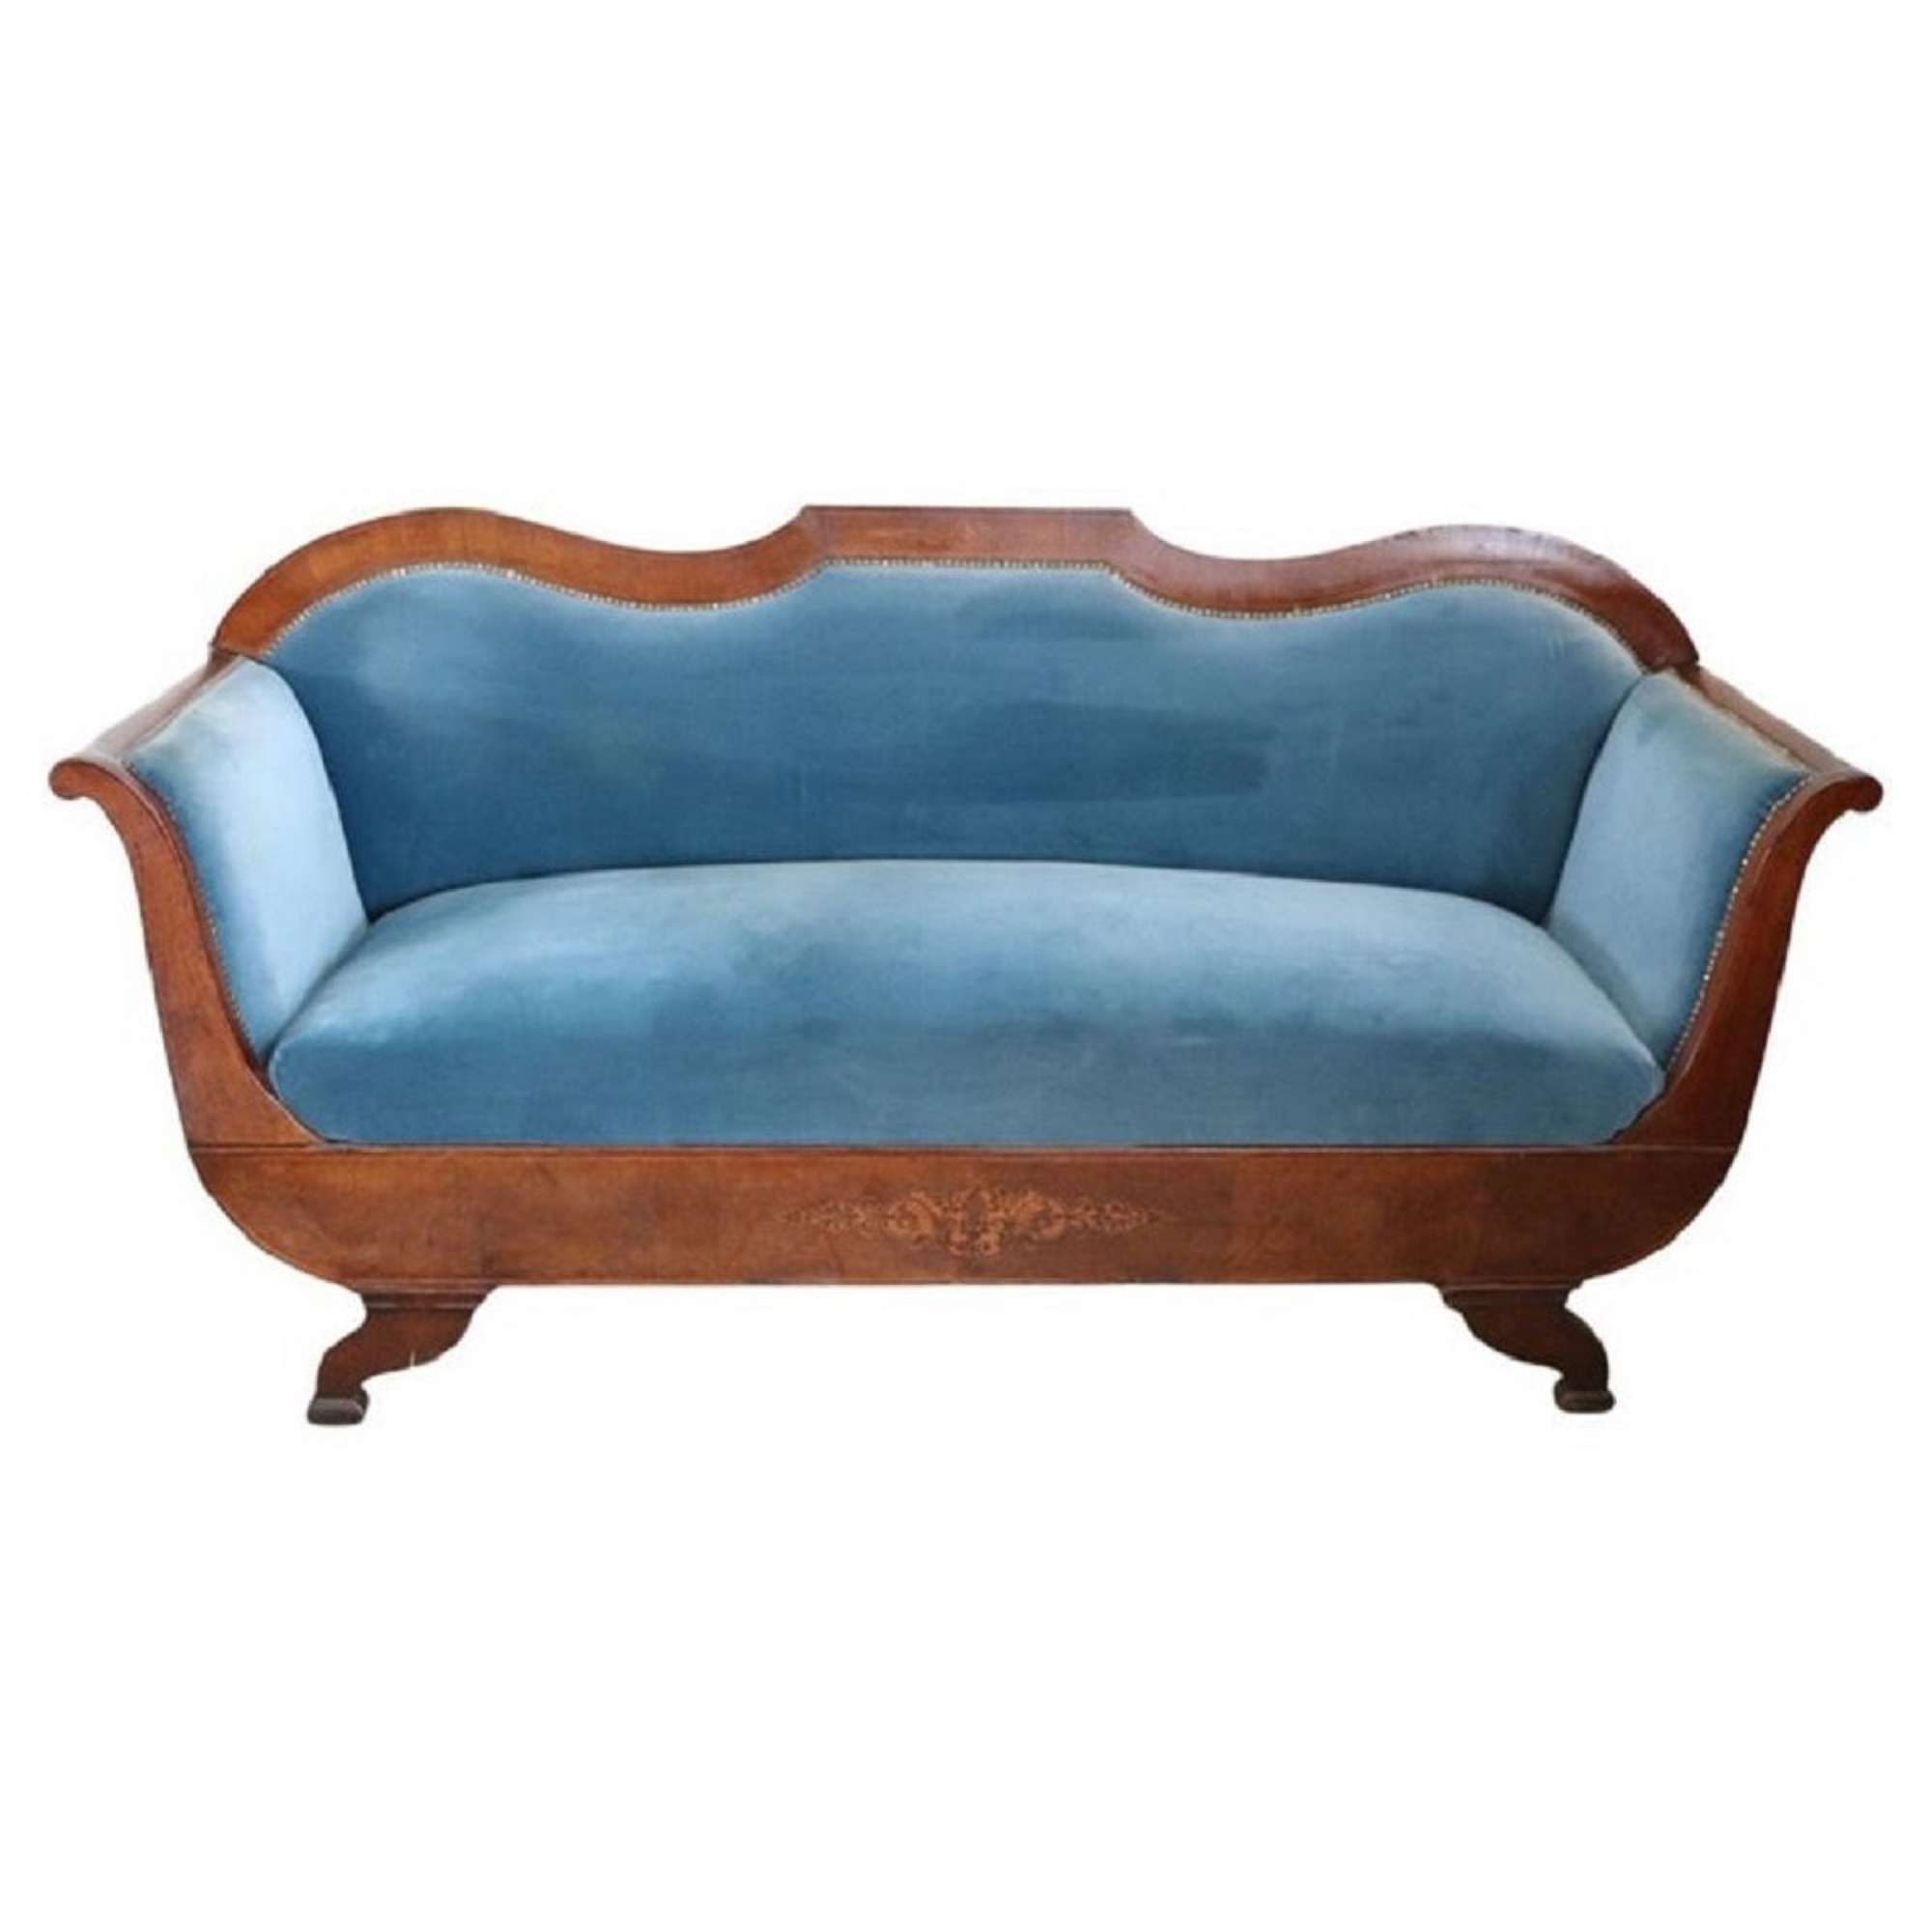 Antique Sofa In Walnut Wood Inlaid With Velvet